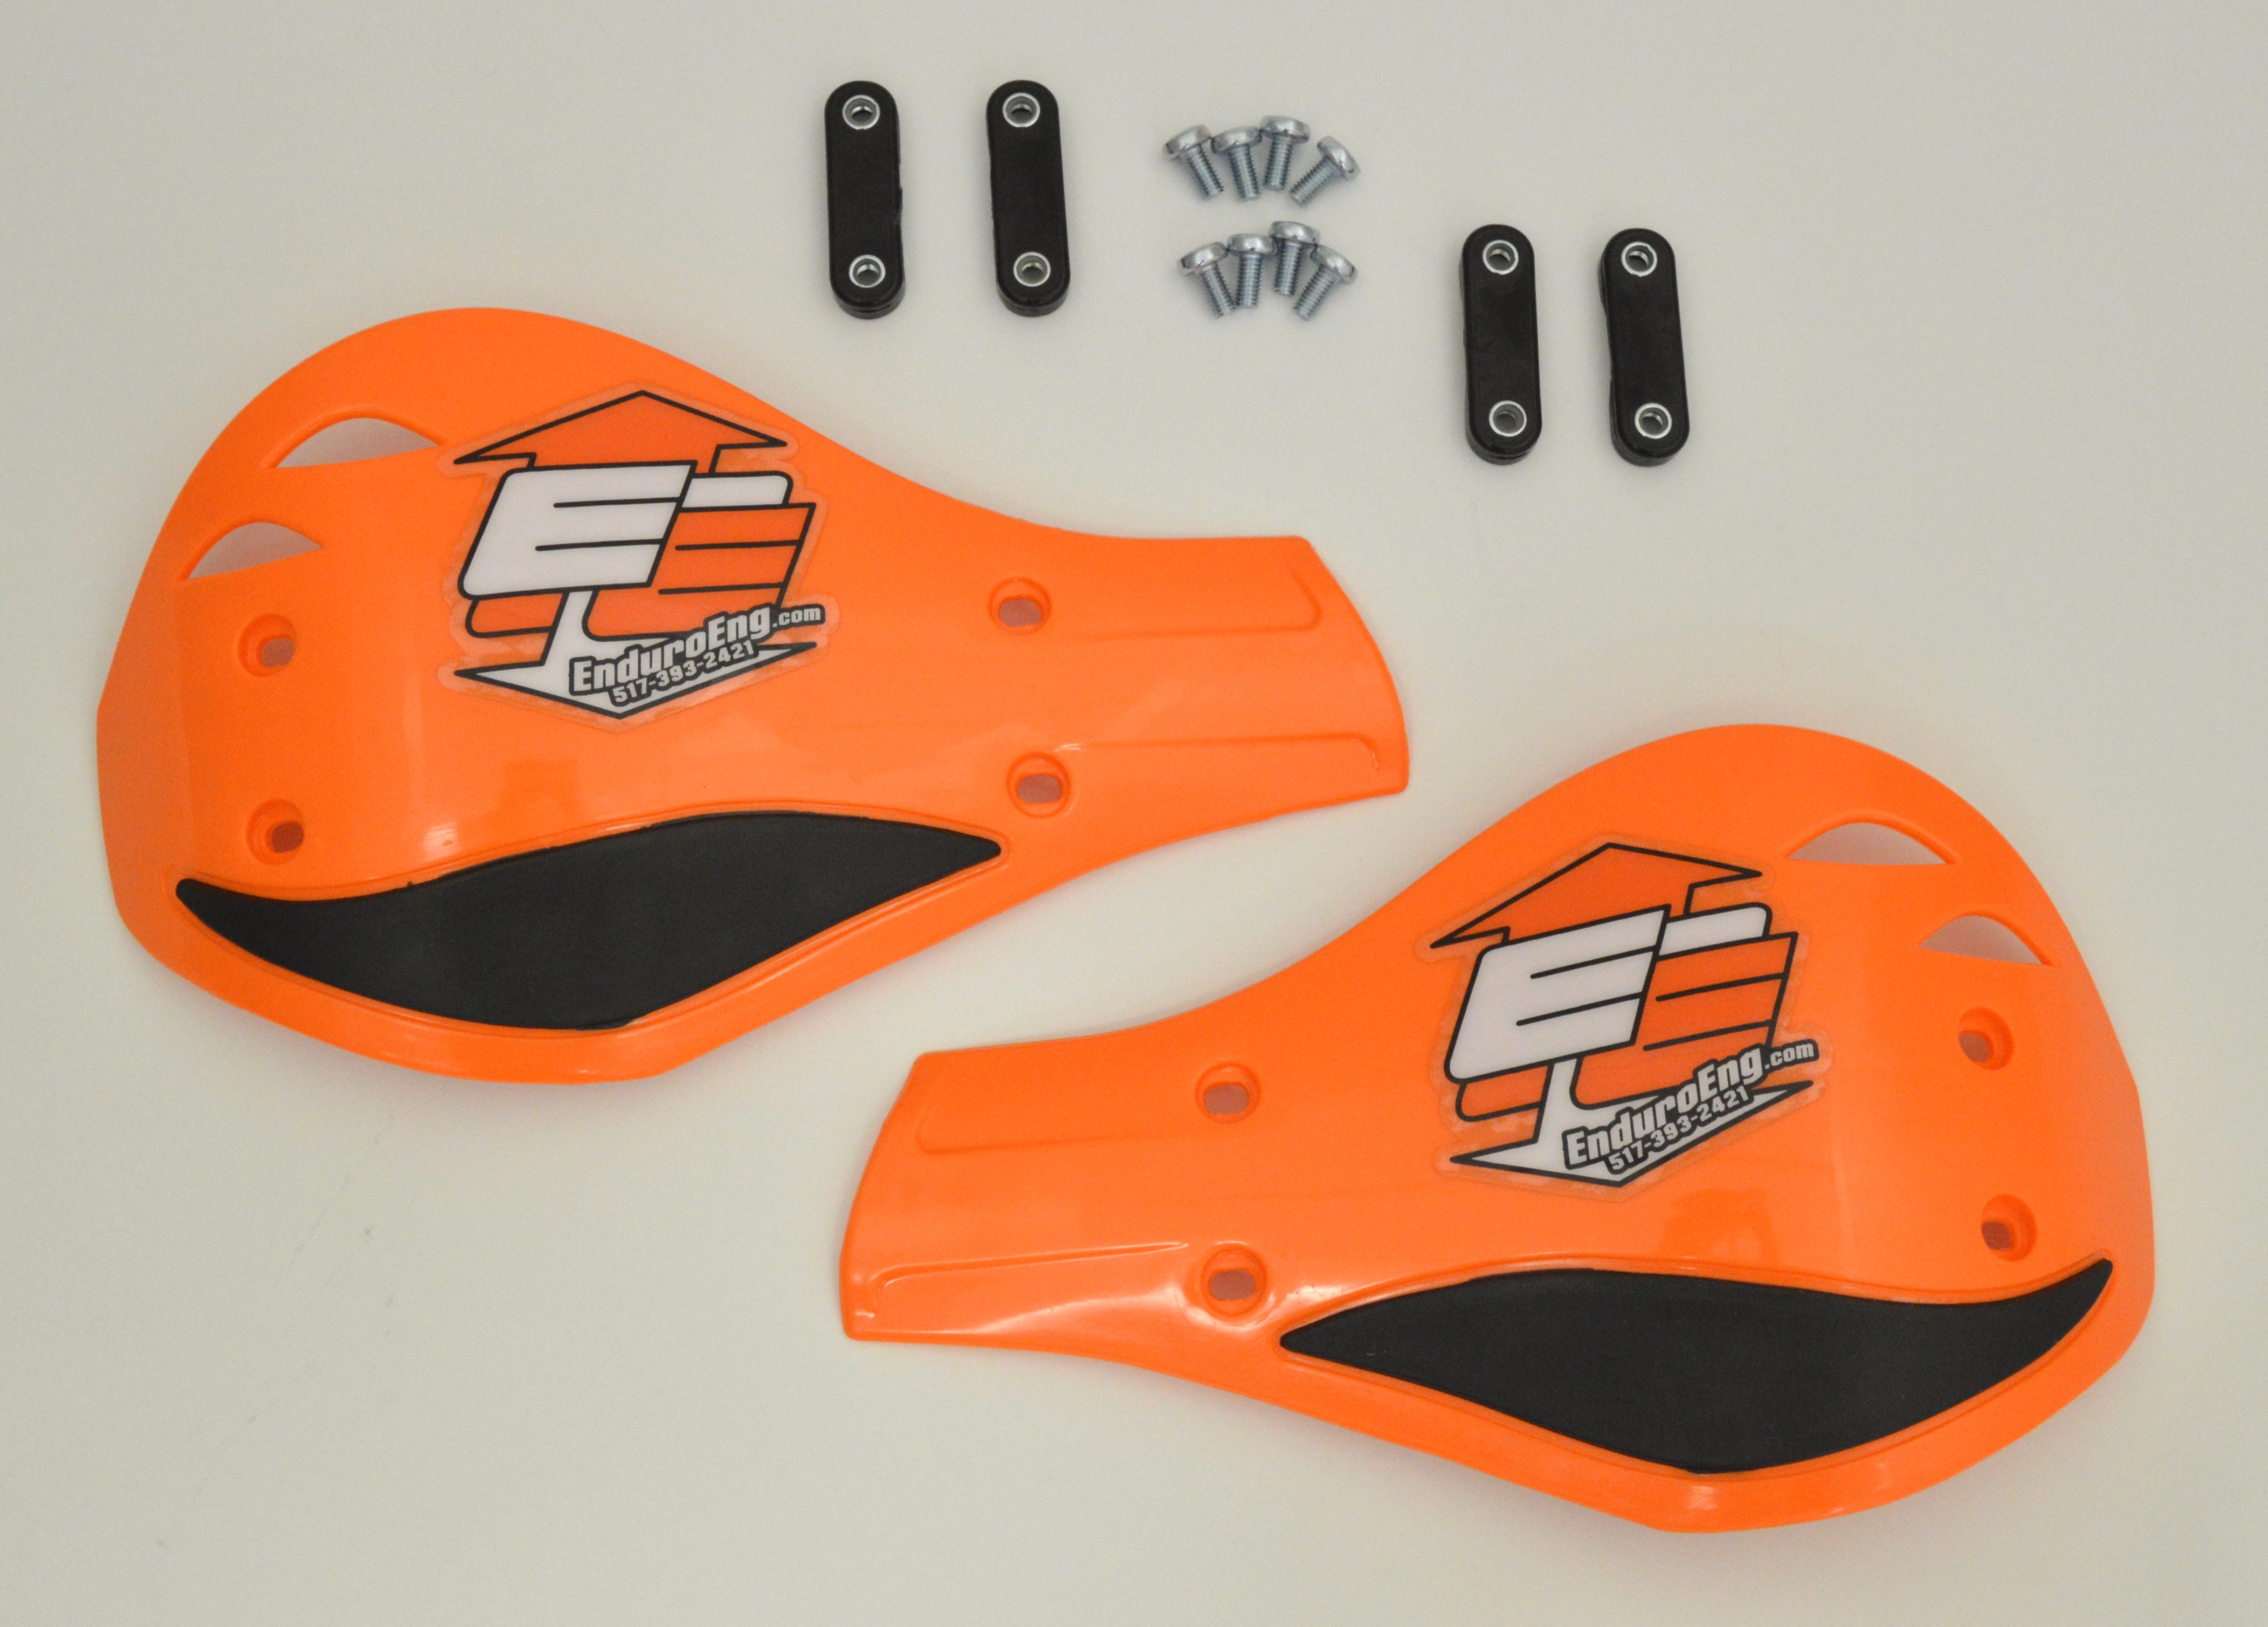 Main image of EE Plastic Roost Deflectors (Orange)